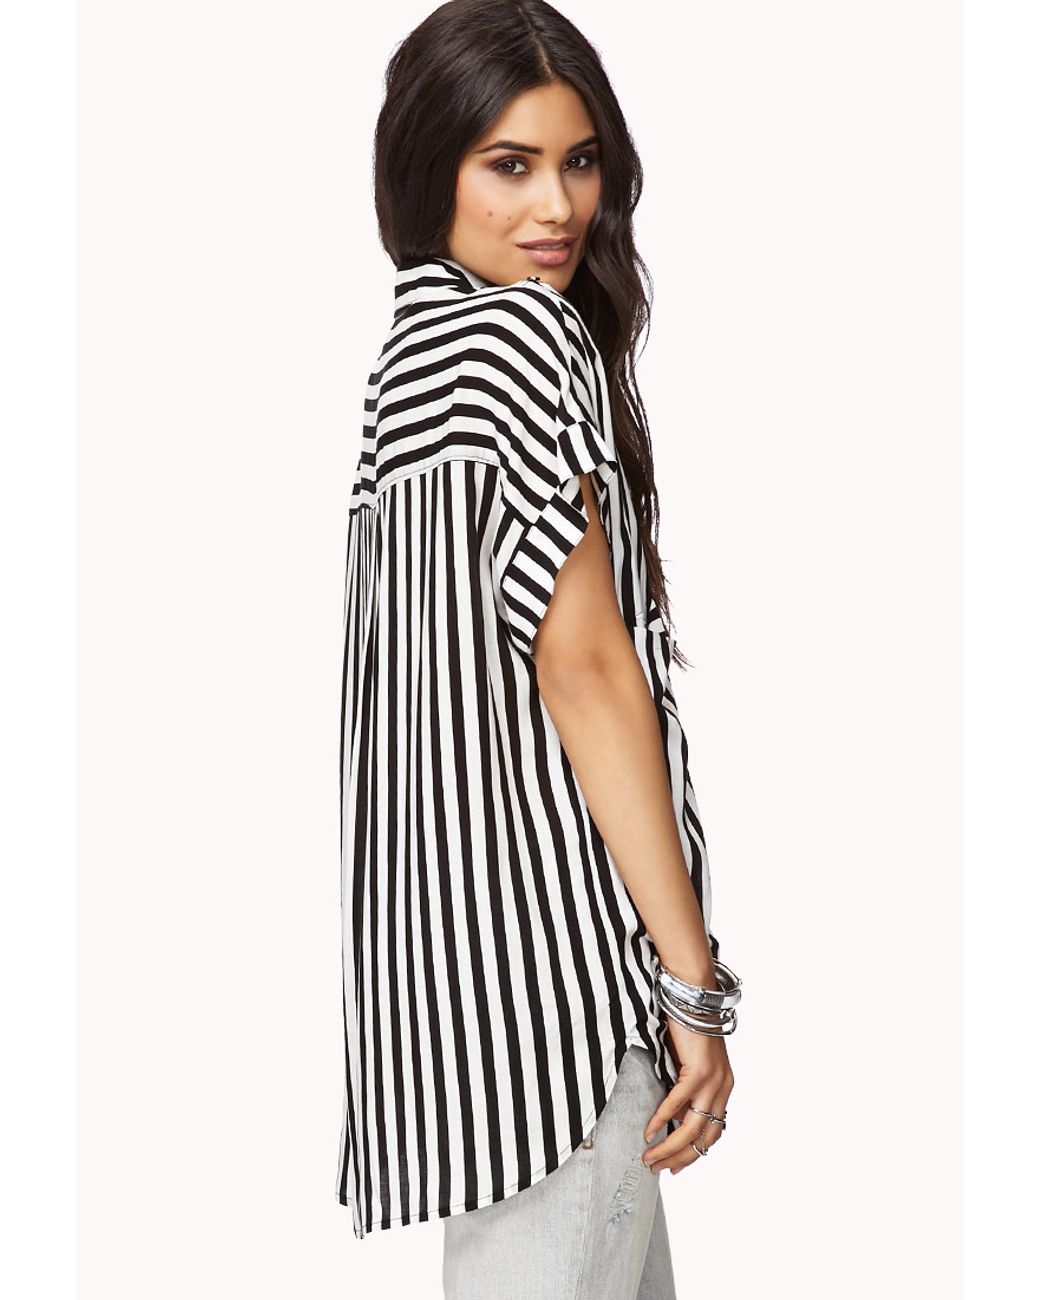 Forever 21 Mod Vertical Striped Shirt in Black/White (White) | Lyst